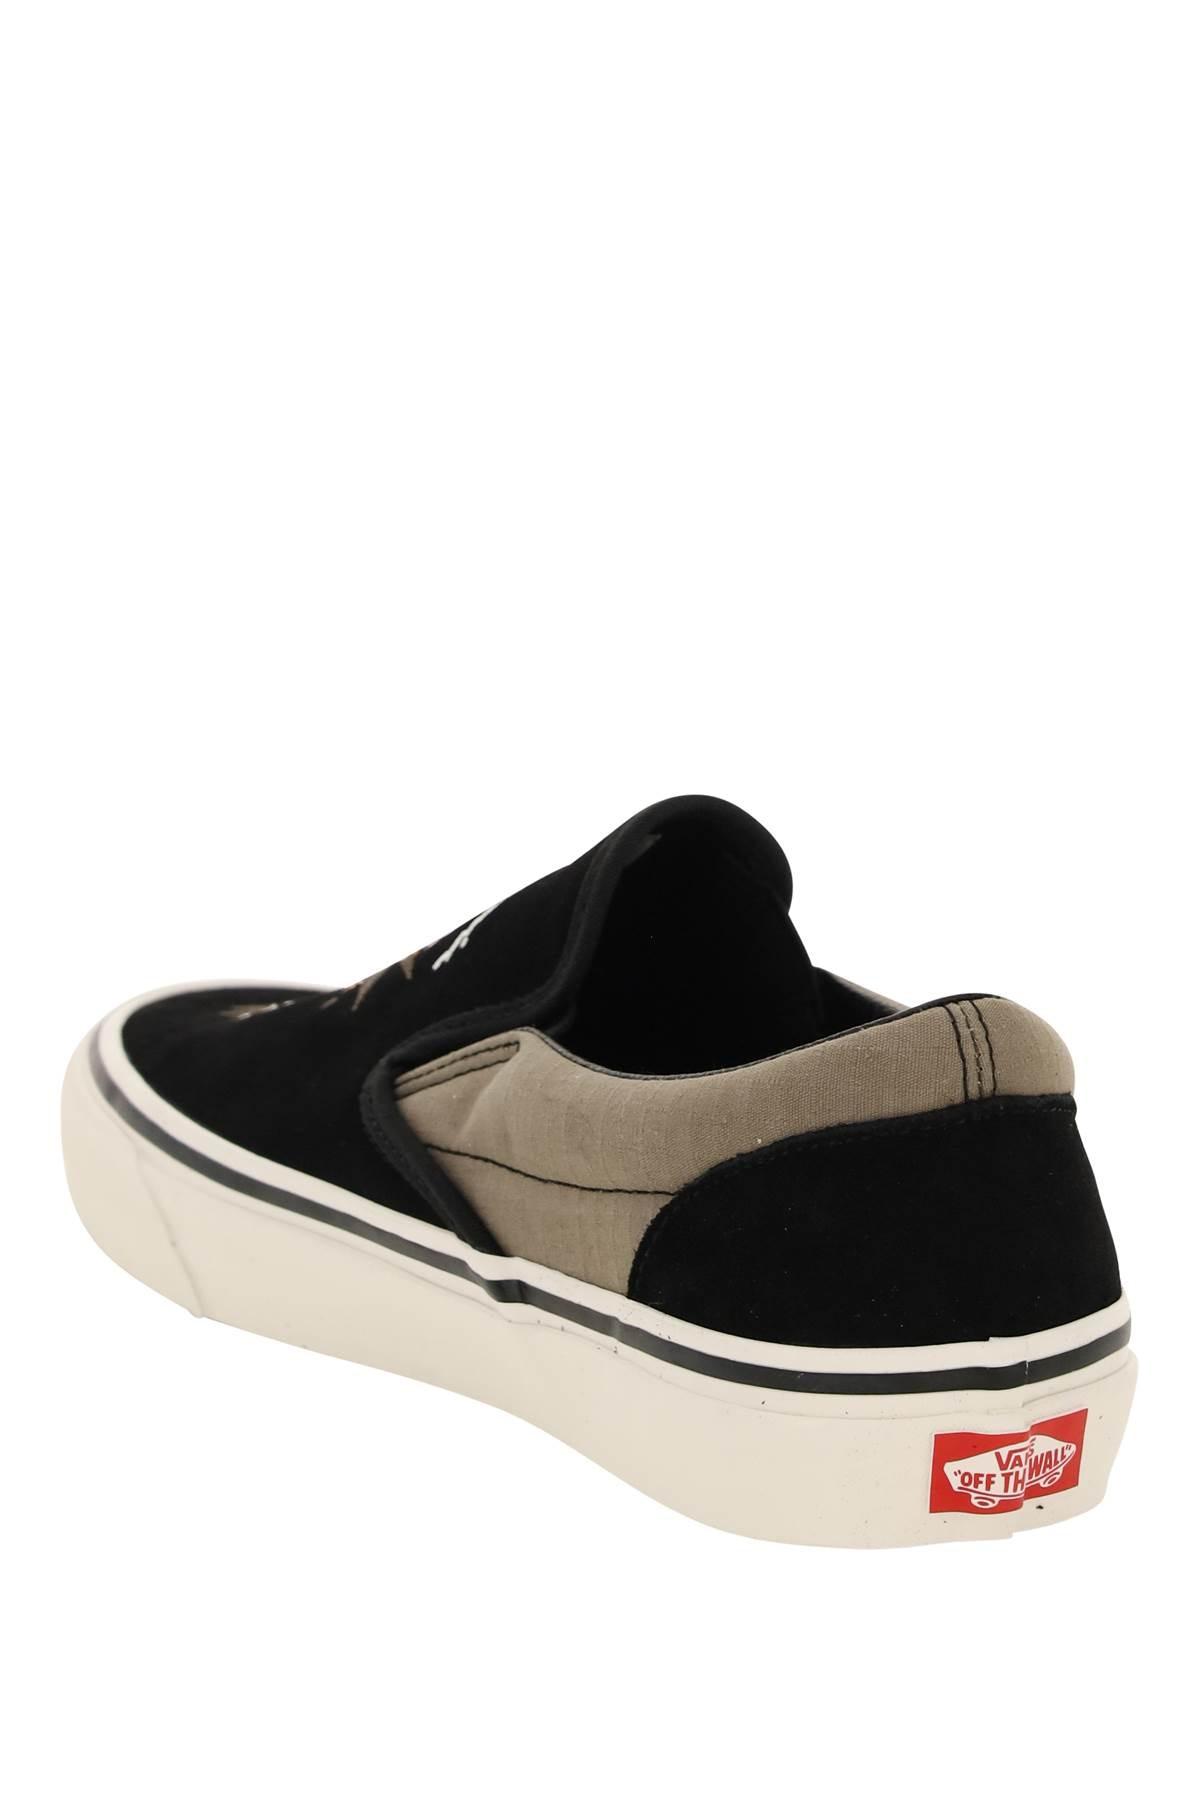 Vans Suede Classic Slip-on Tiger Sneakers in Black,Khaki (Black) for Men |  Lyst